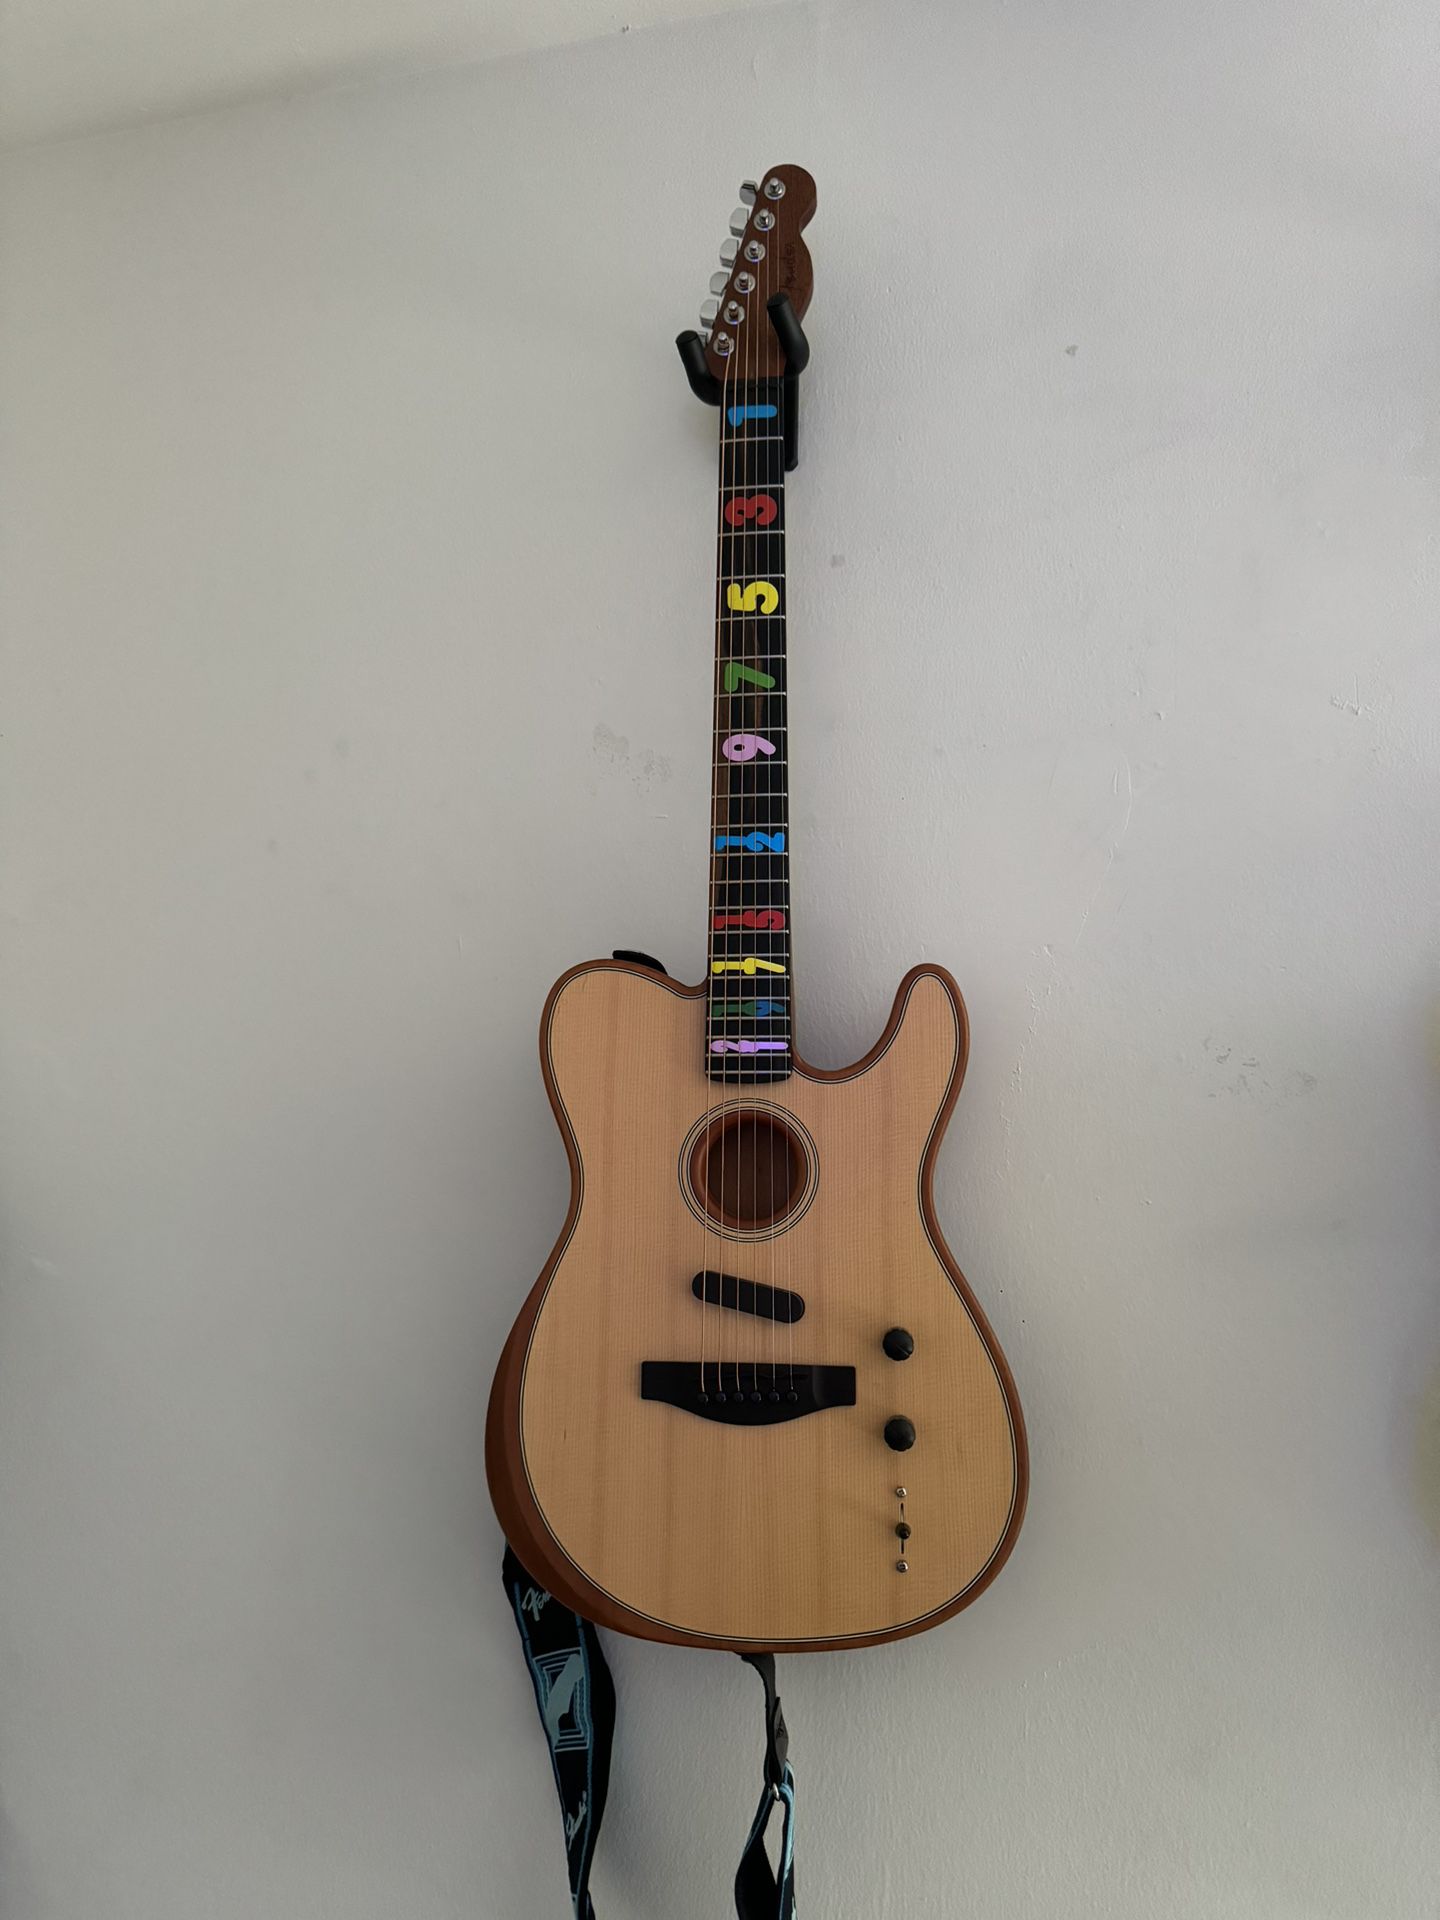 Fender Acoustasonic Telecaster Ebony Fingerboard Acoustic-Electric Guitar Natural